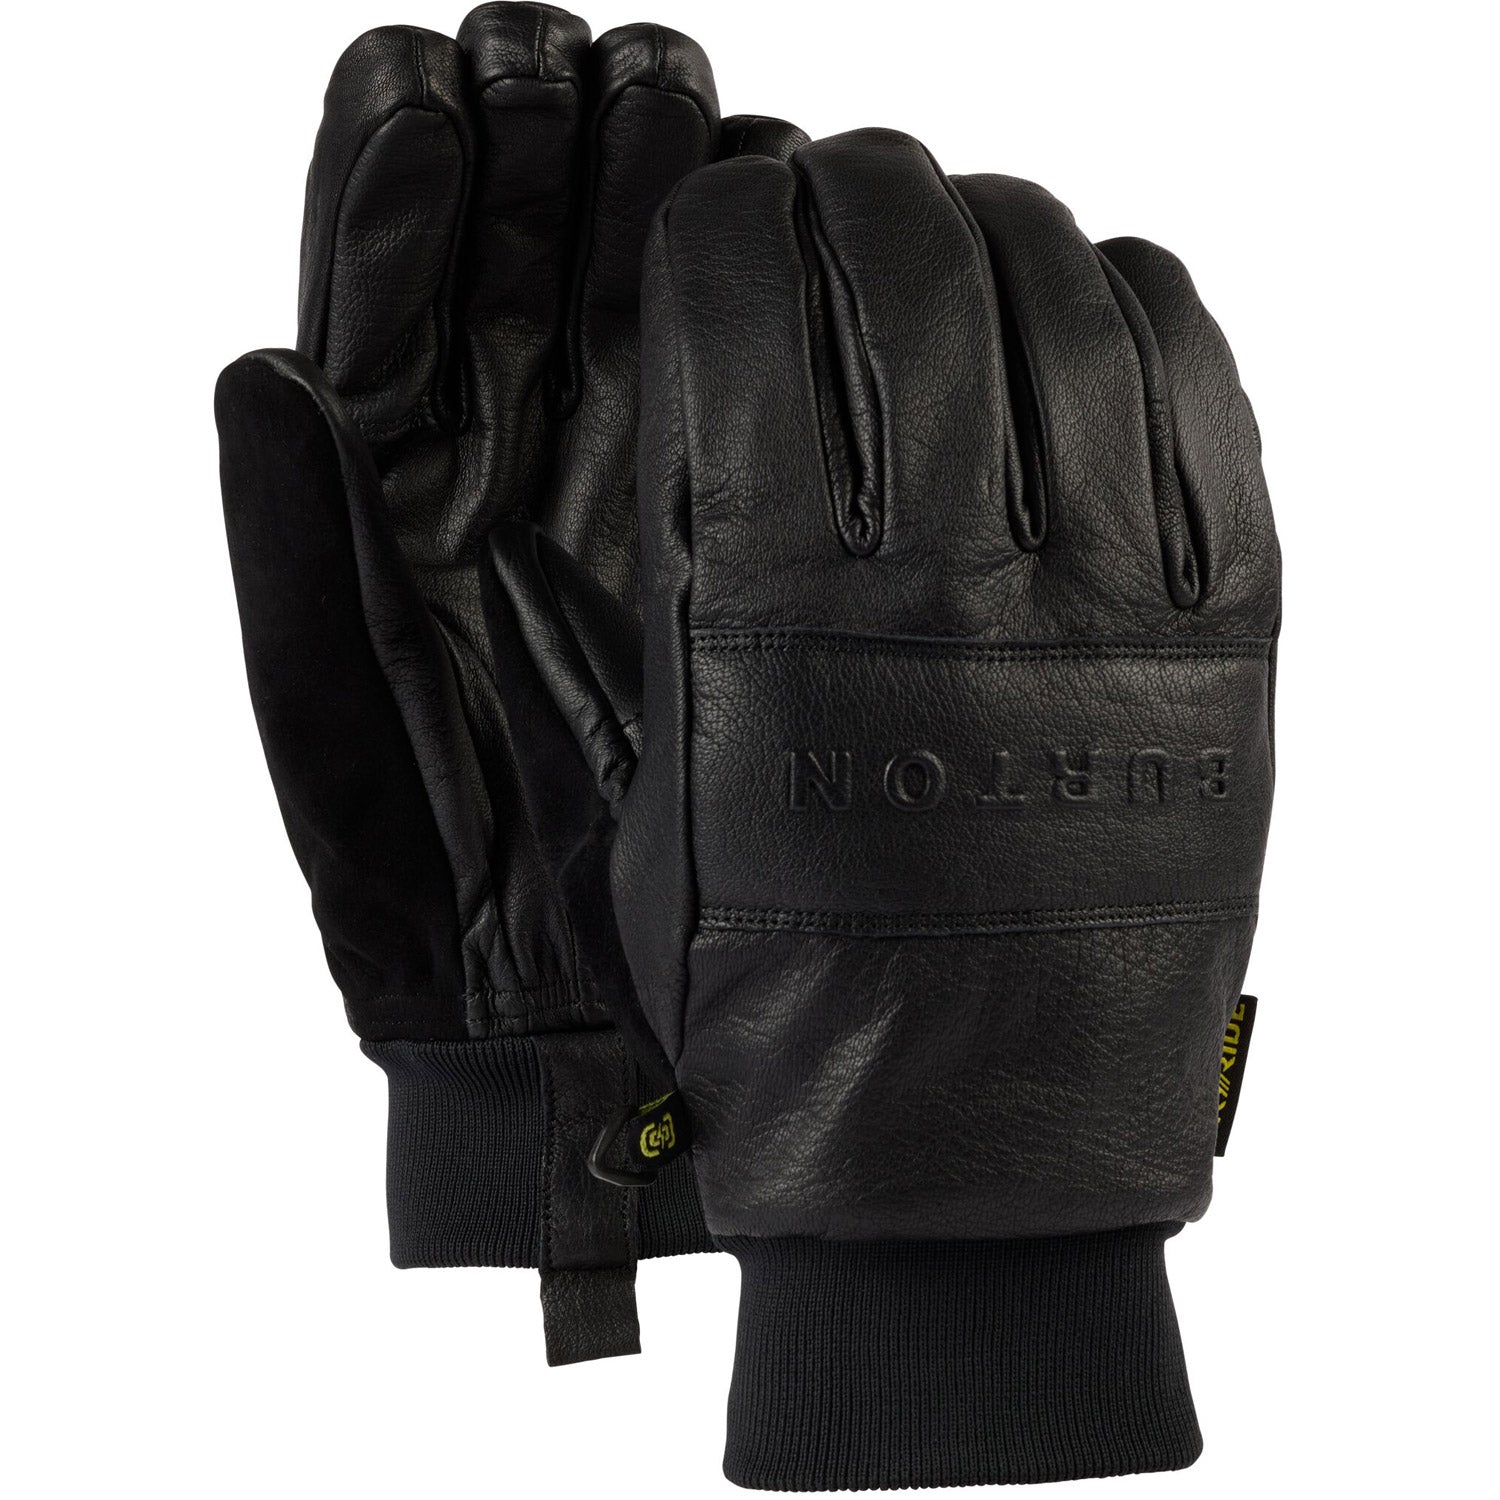 Treeline Leather Snowboard Gloves